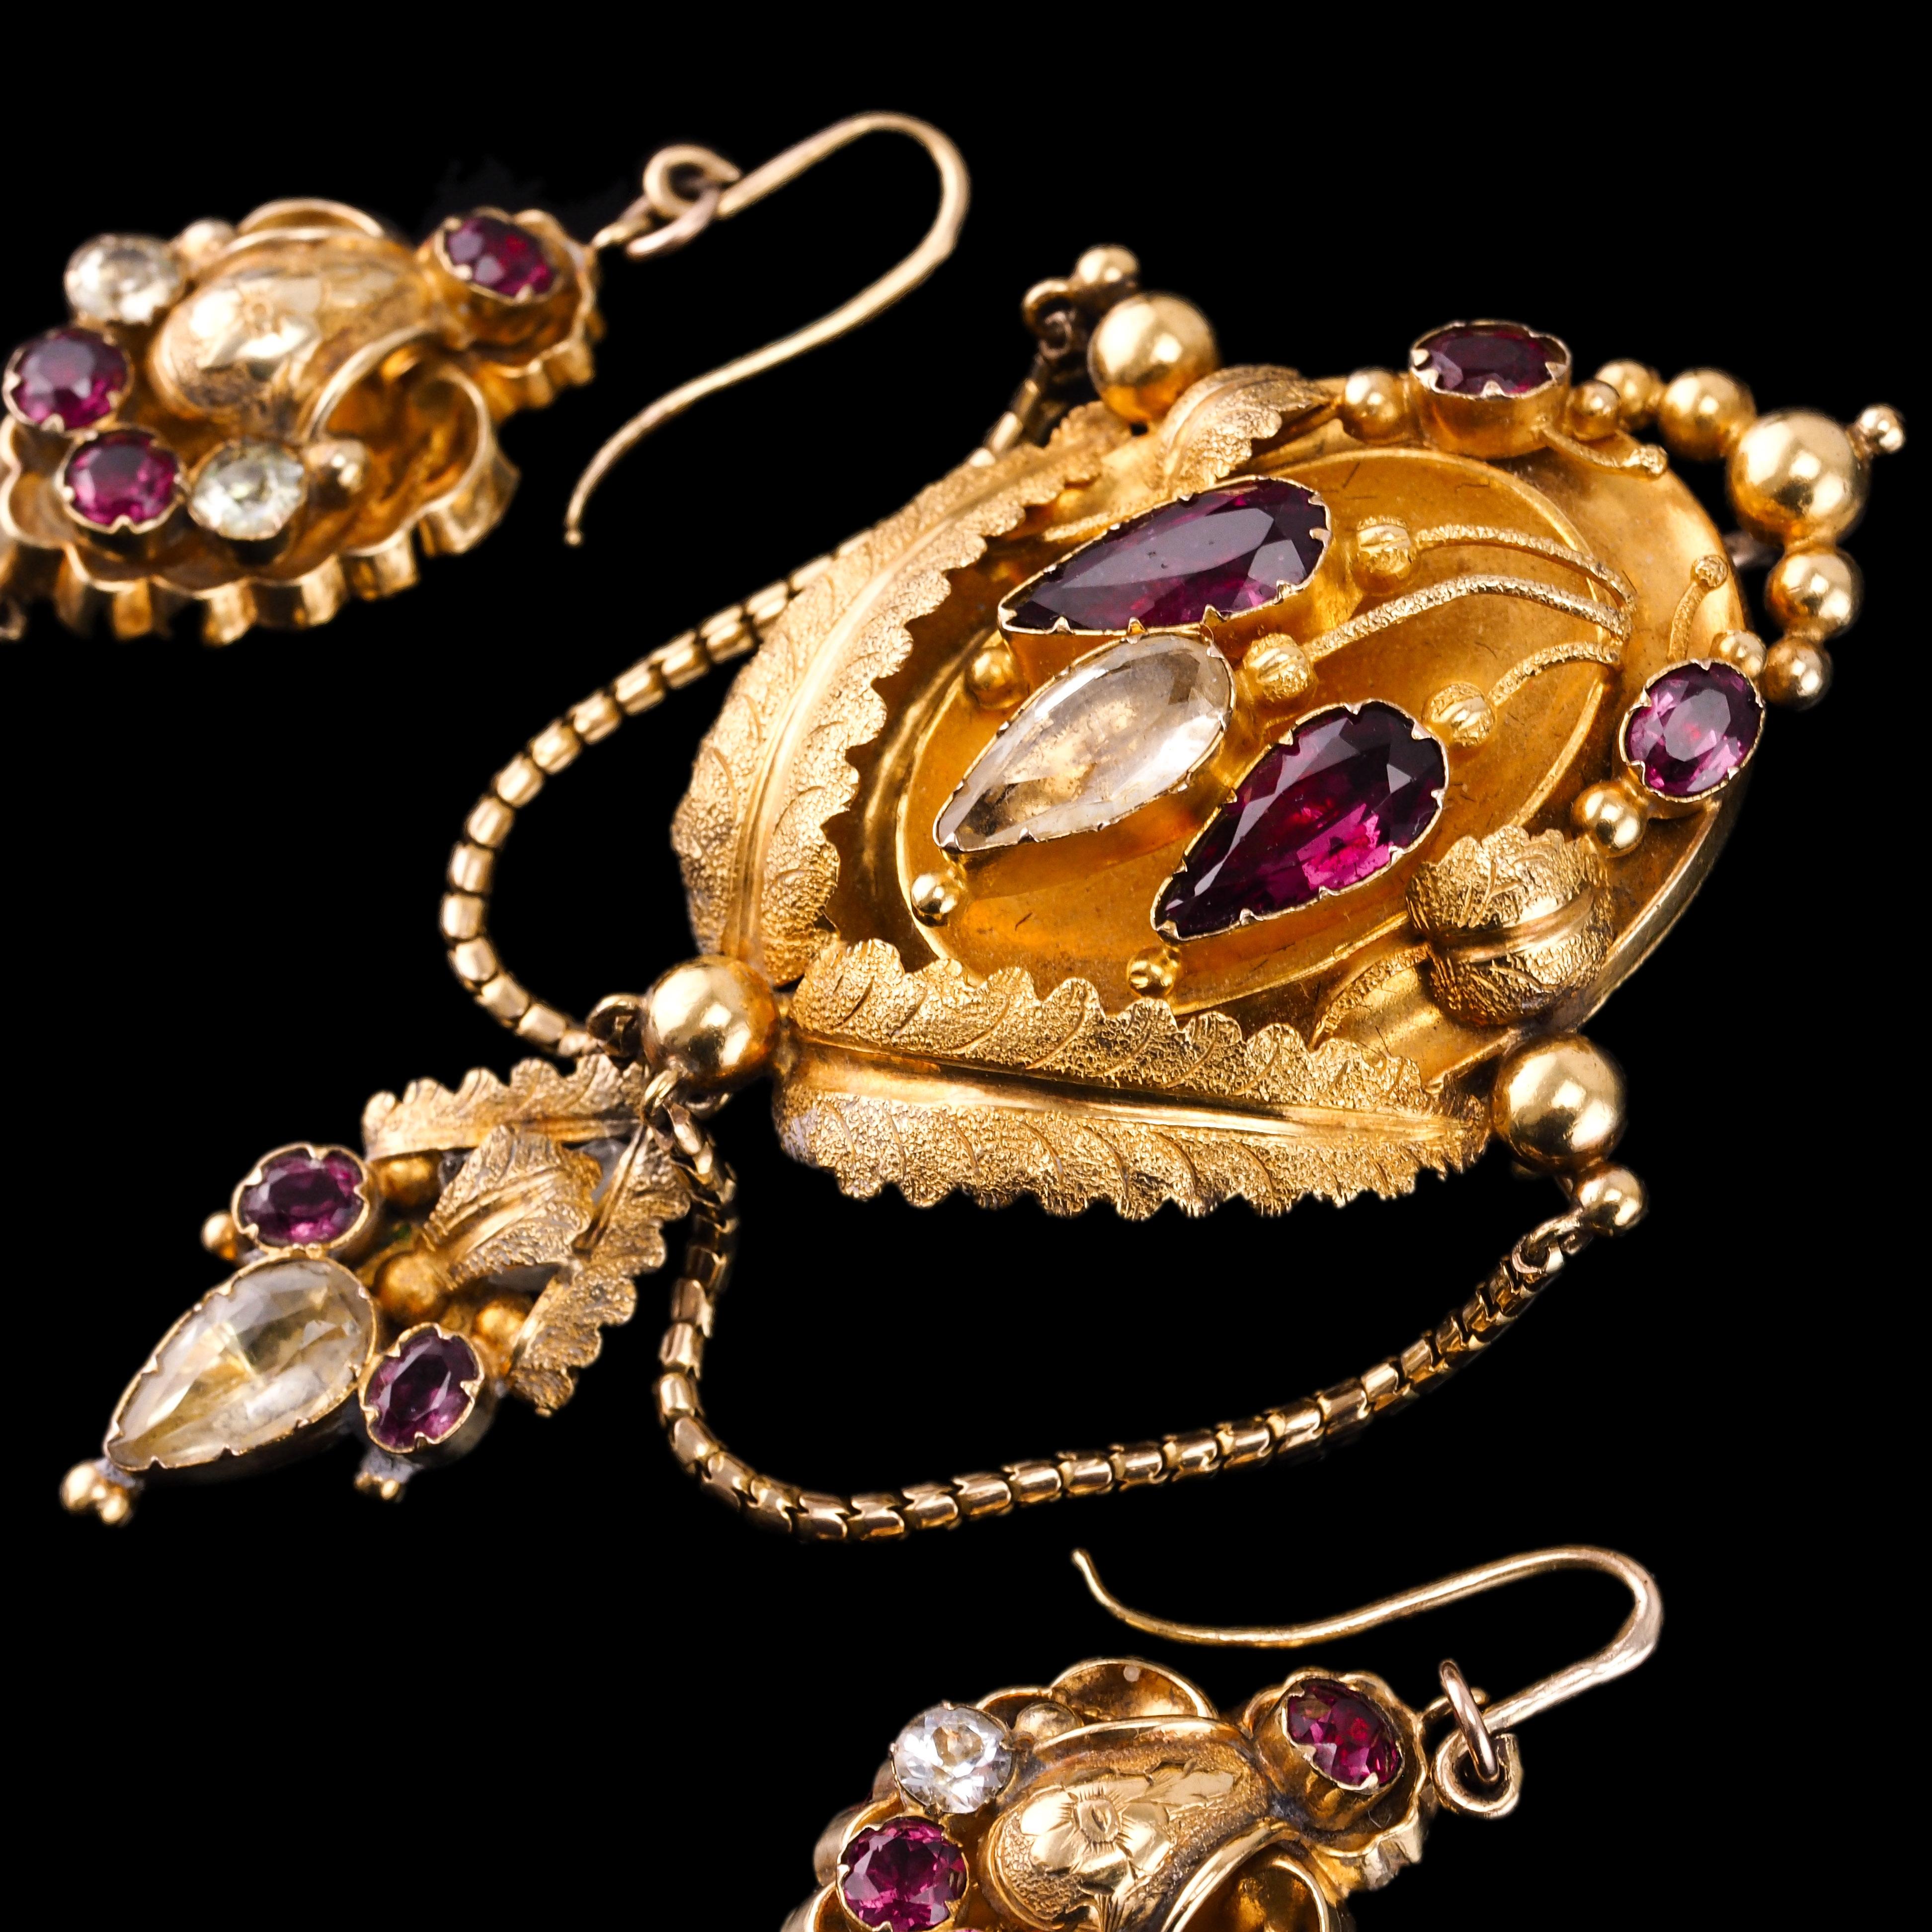 Antique 18K Gold Brooch Pendant & Earrings Garnet & Chrysoberyl - c.1870 10